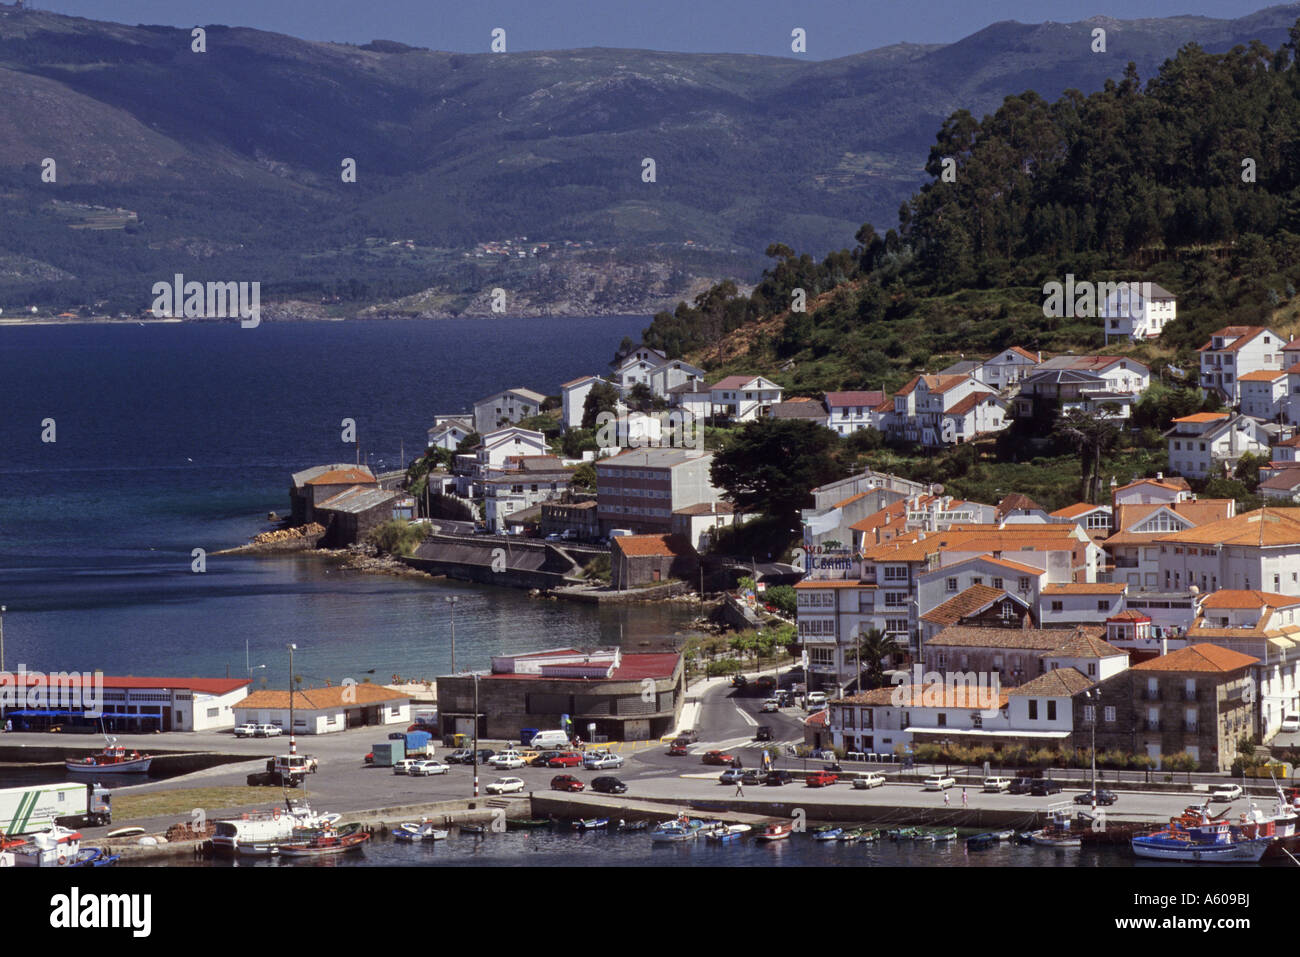 Rias gallegas fotografías e imágenes de alta resolución - Alamy